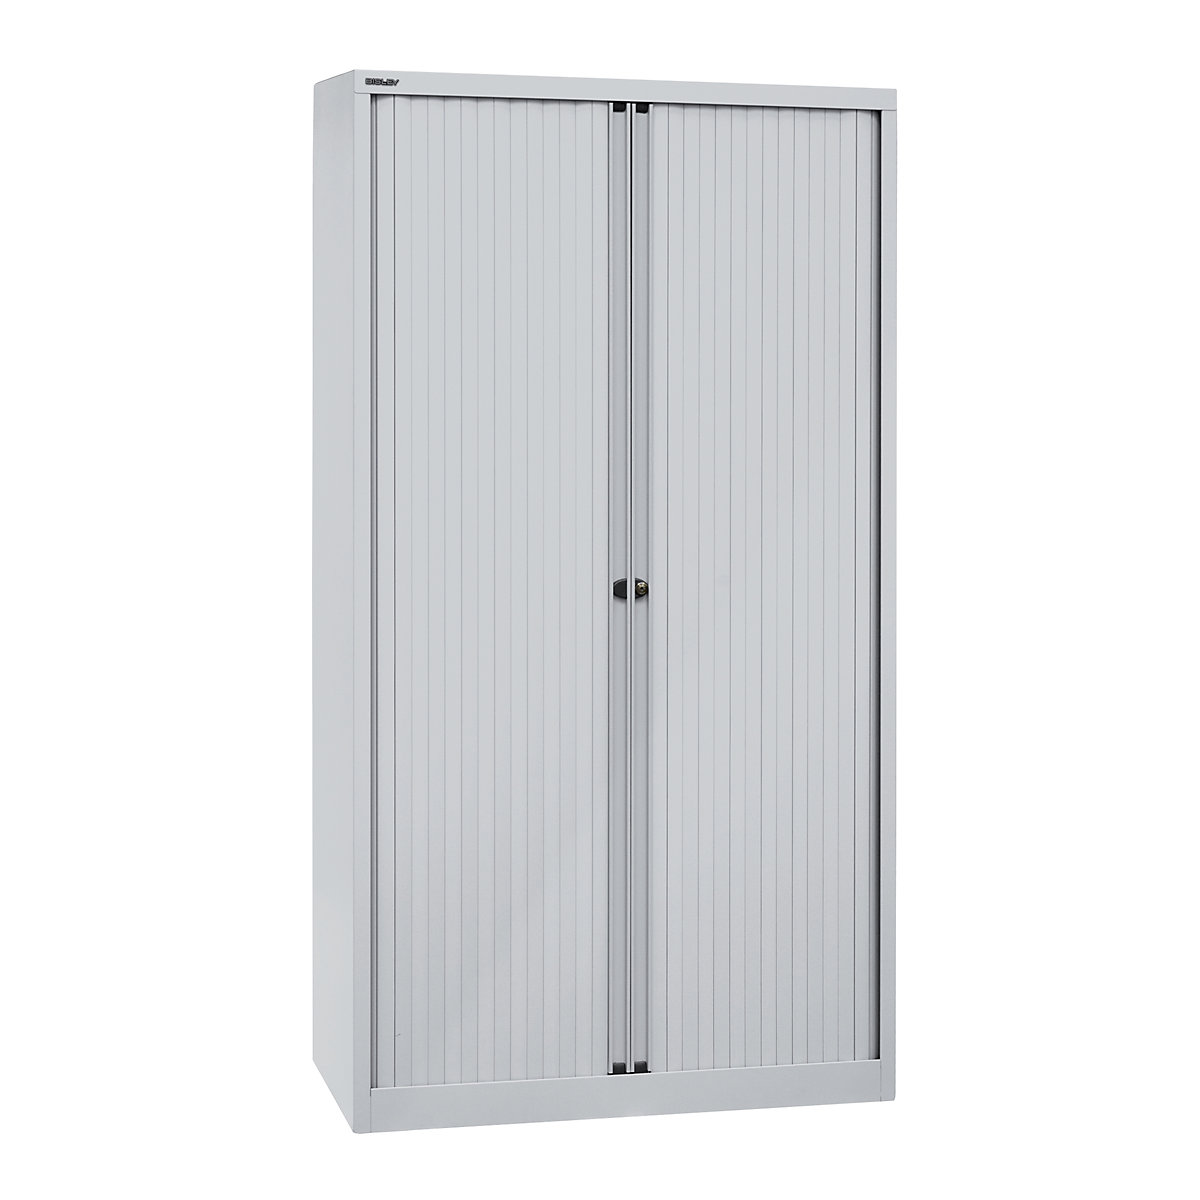 EURO roller shutter cupboard – BISLEY, width 1000 mm, 4 shelves, light grey-7